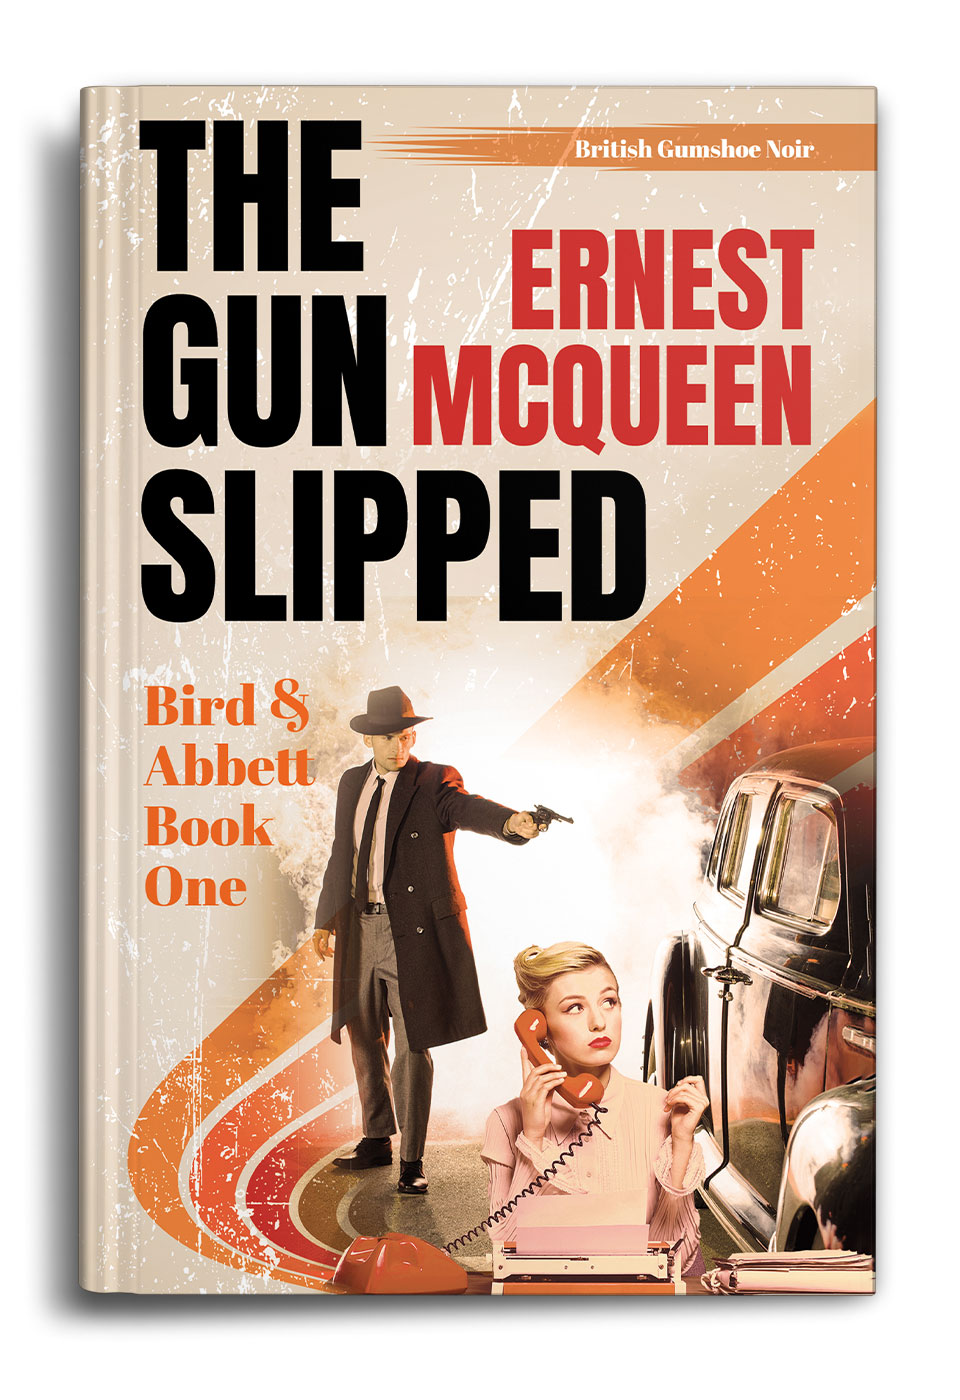 The-Gun-Slipped-by-Ernest-McQueen